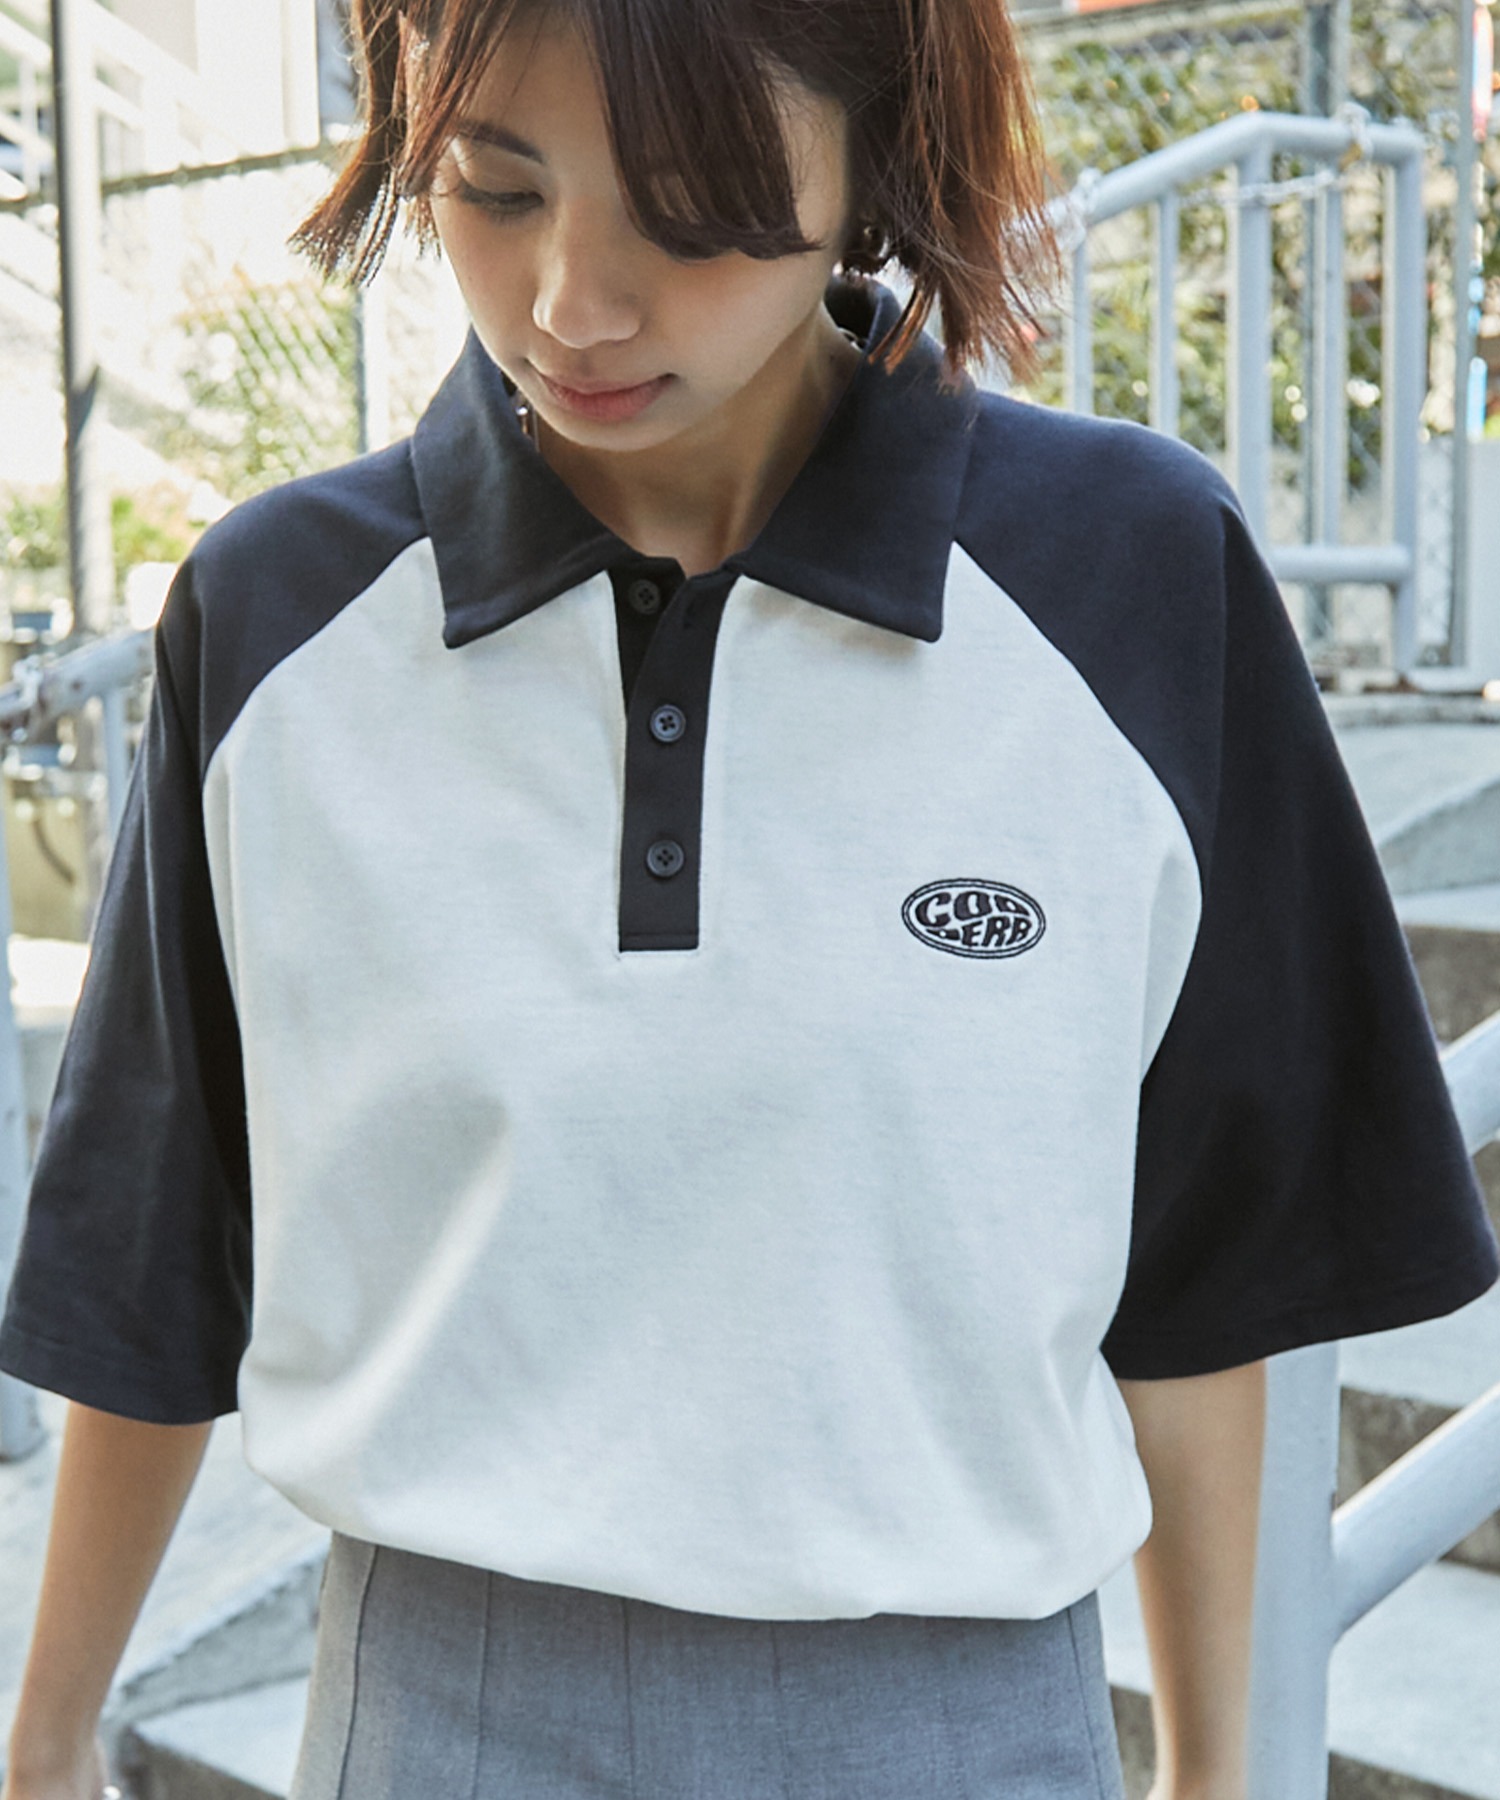 CODDERR】ワンポイントサークル刺繍ラグランポロシャツ MONO-MART 